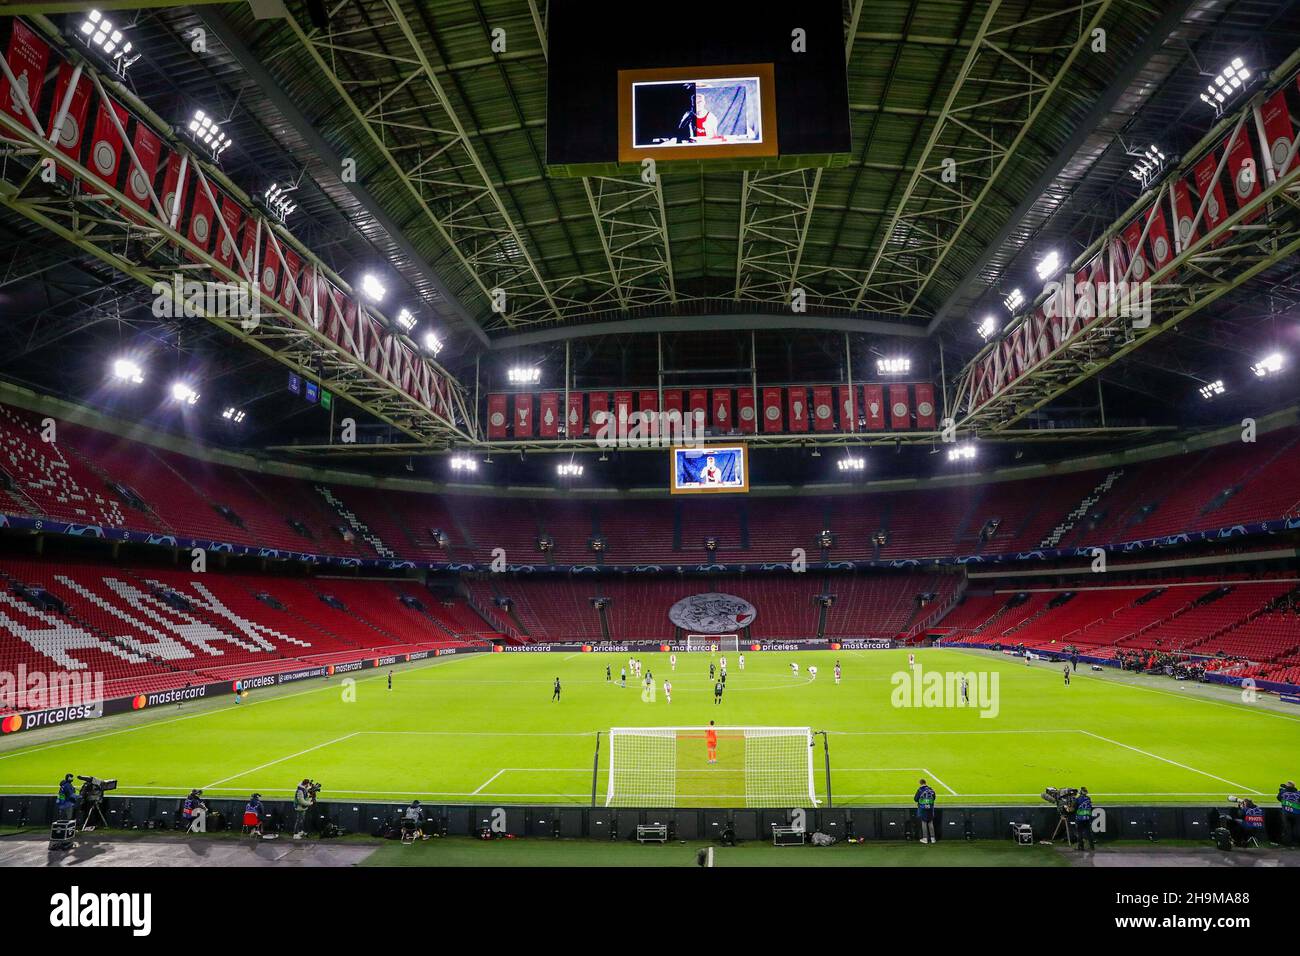 Ajax Fotball Club Shop Interior on Amsterdam Arena, Netherlands Editorial  Stock Image - Image of arena, hall: 92133674